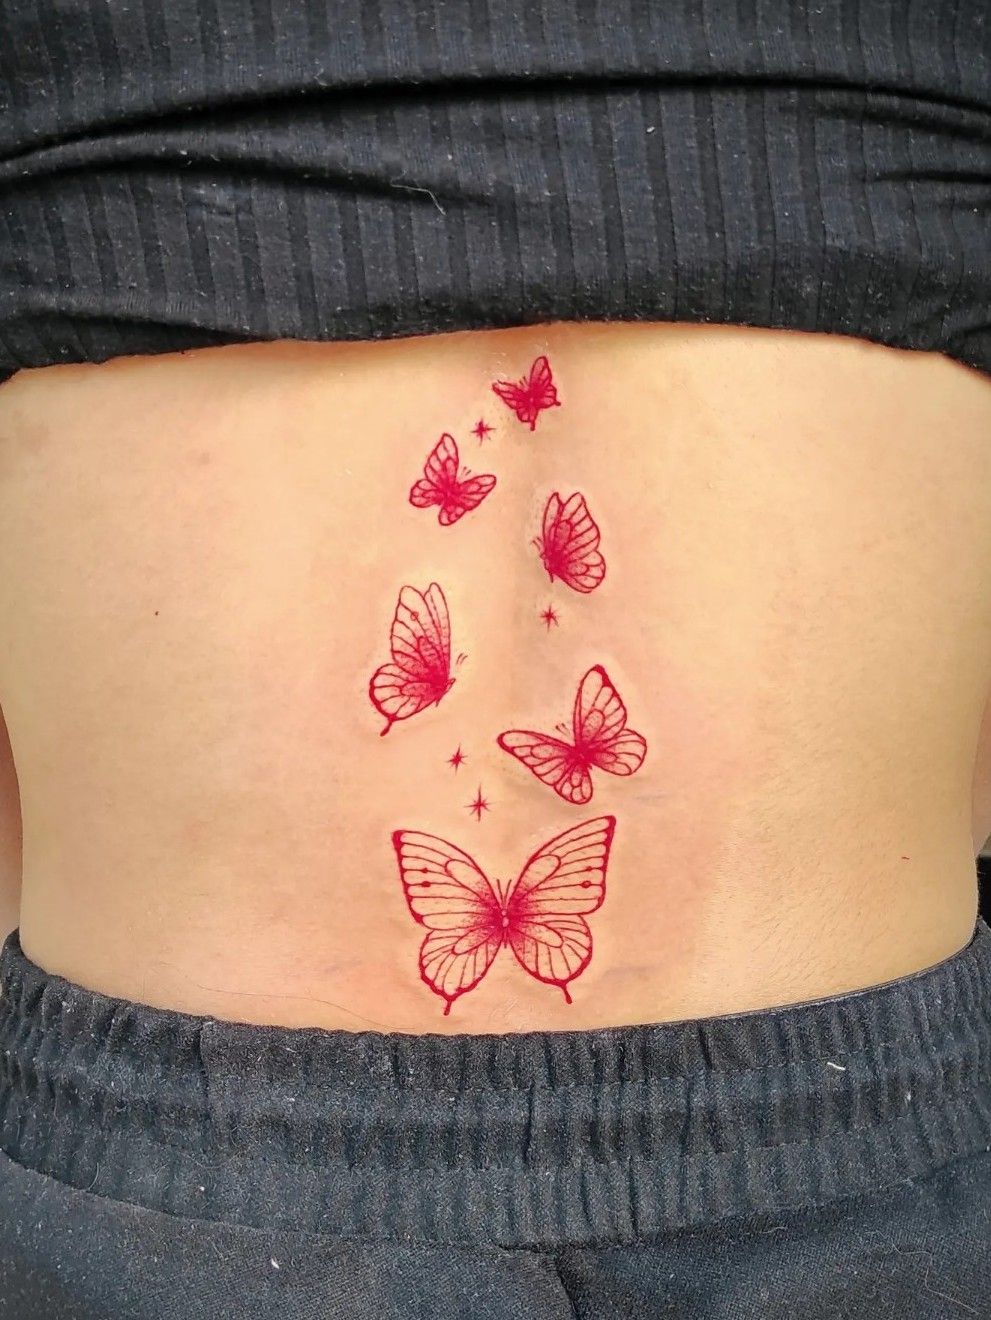 TAFLY Temporary Tattoo 3D Butterfly Red Peony Body Art Fake Stickers 5  Sheets  Amazonin Beauty